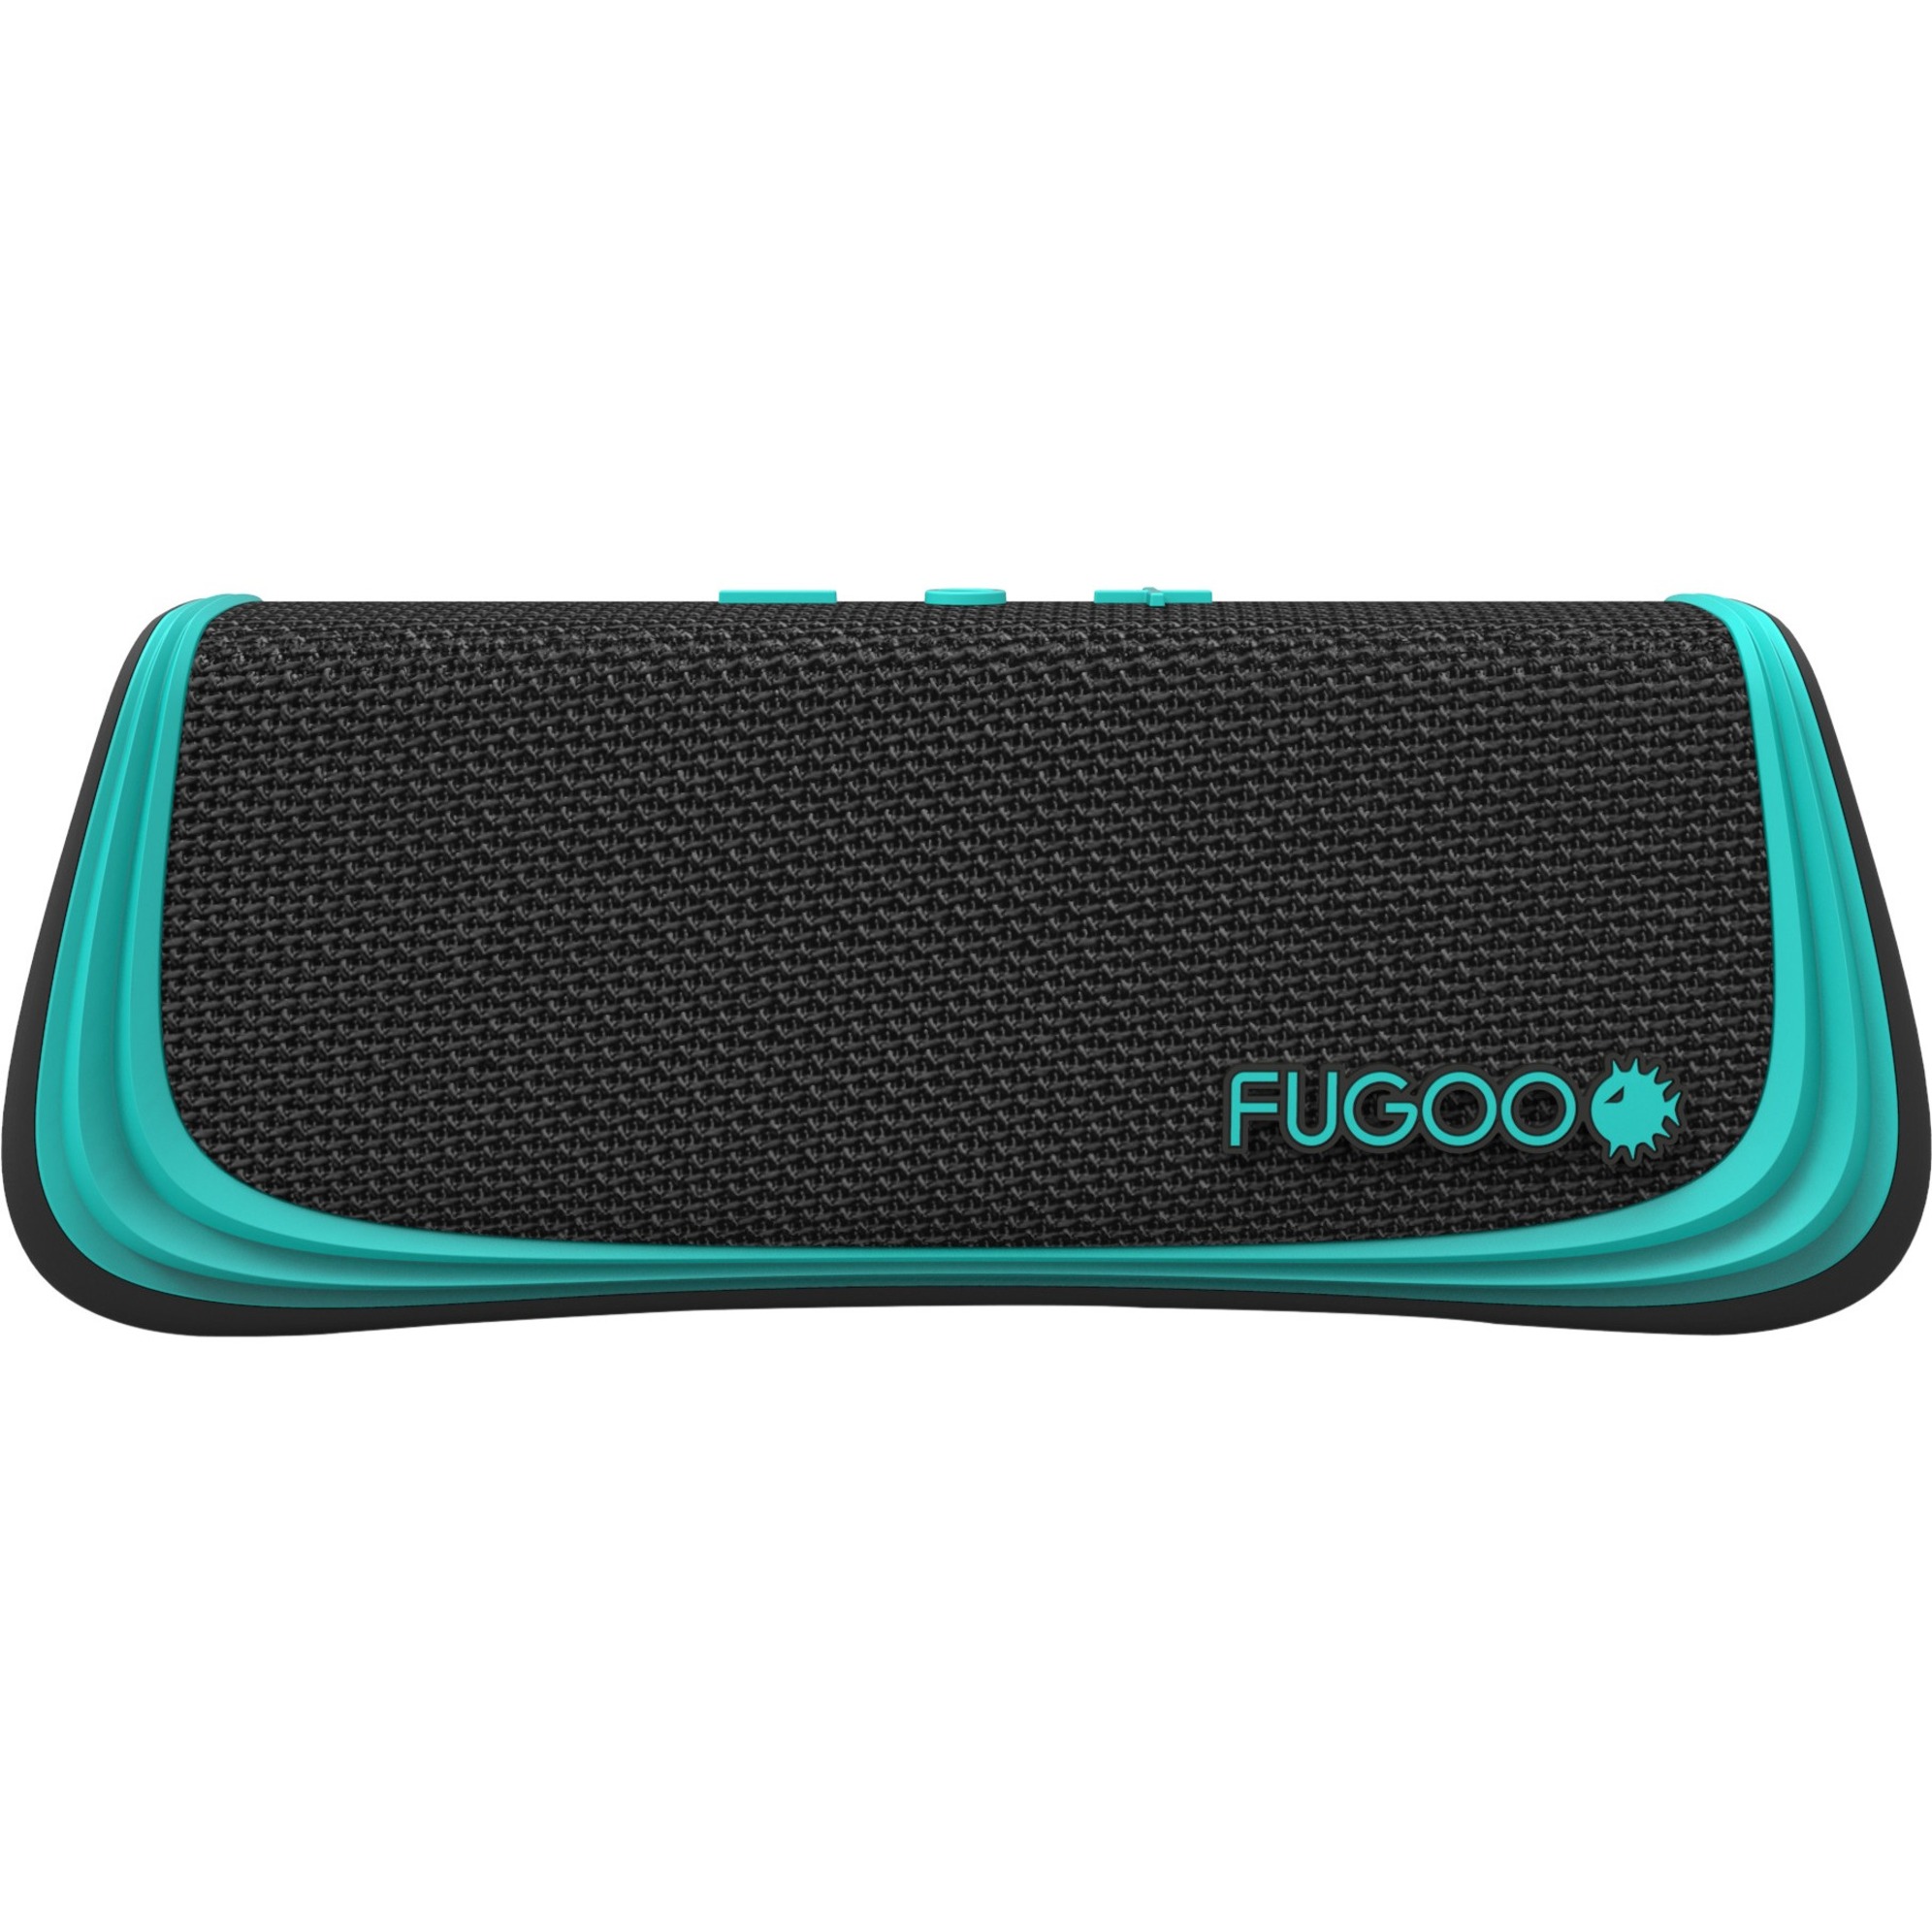 Fugoo Portable Bluetooth Speaker, Black, SPORT - image 3 of 5